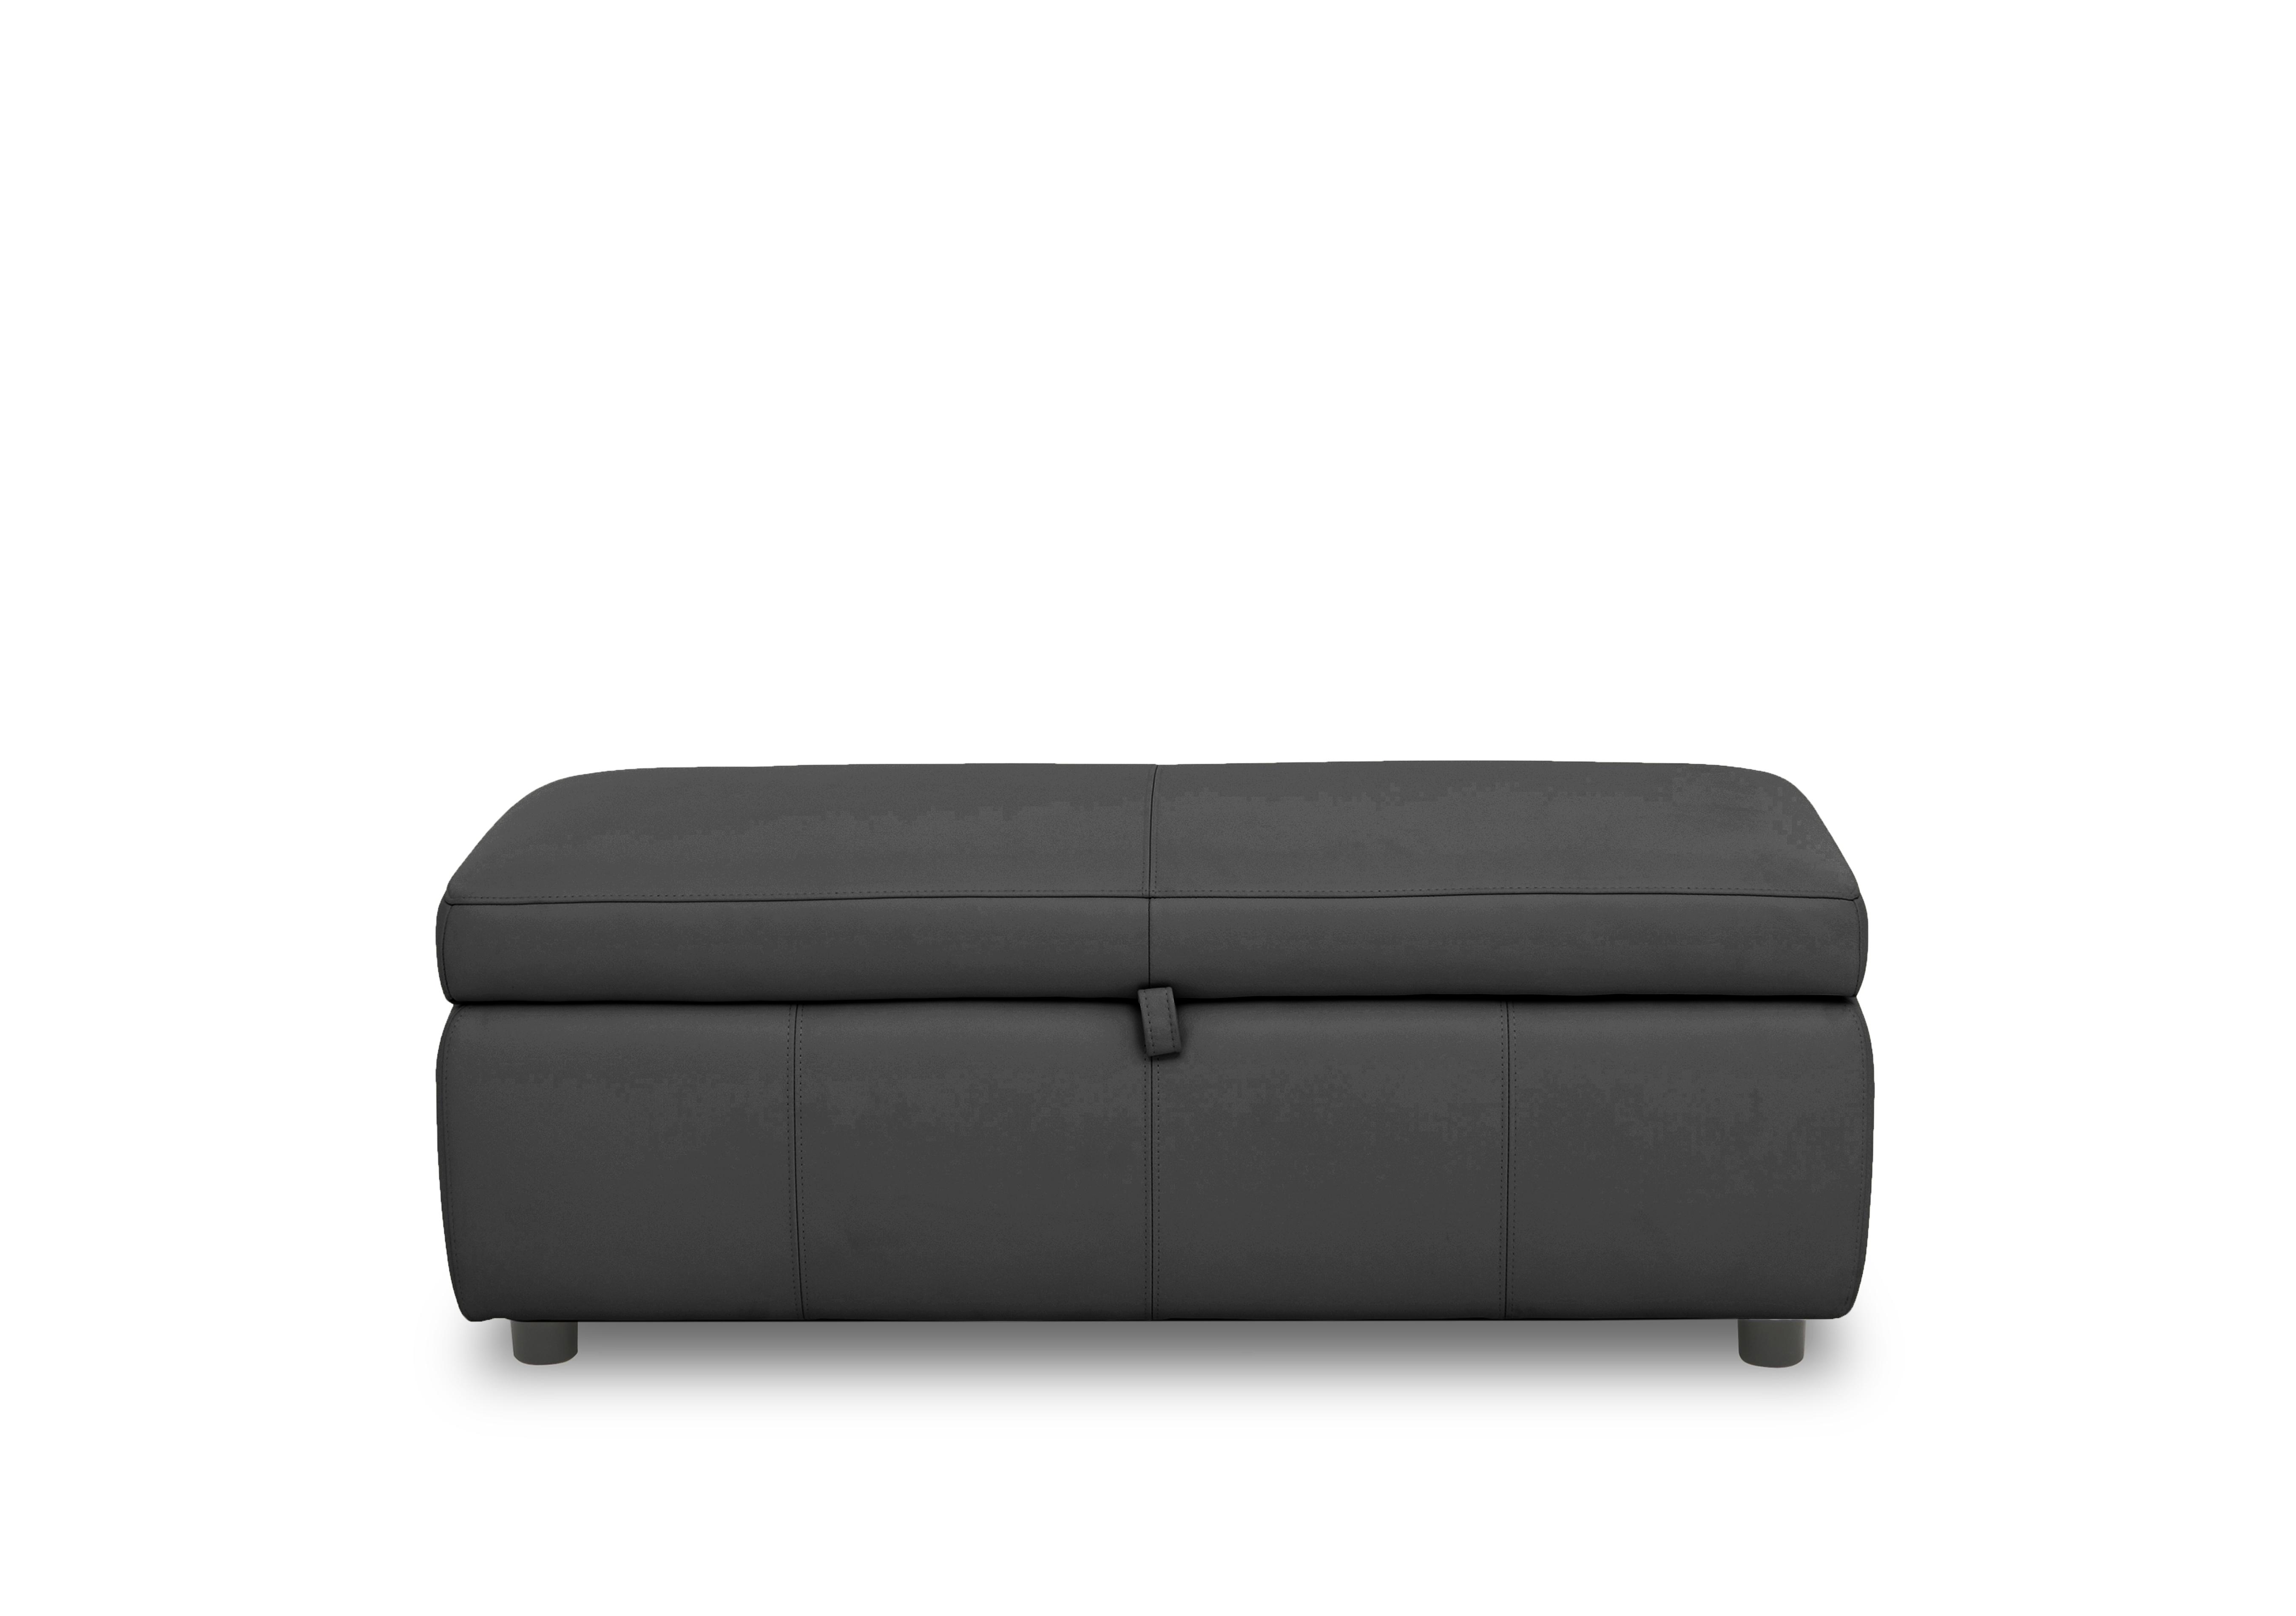 Stark 120cm Leather Blanket Box in Bv-3500 Classic Black on Furniture Village